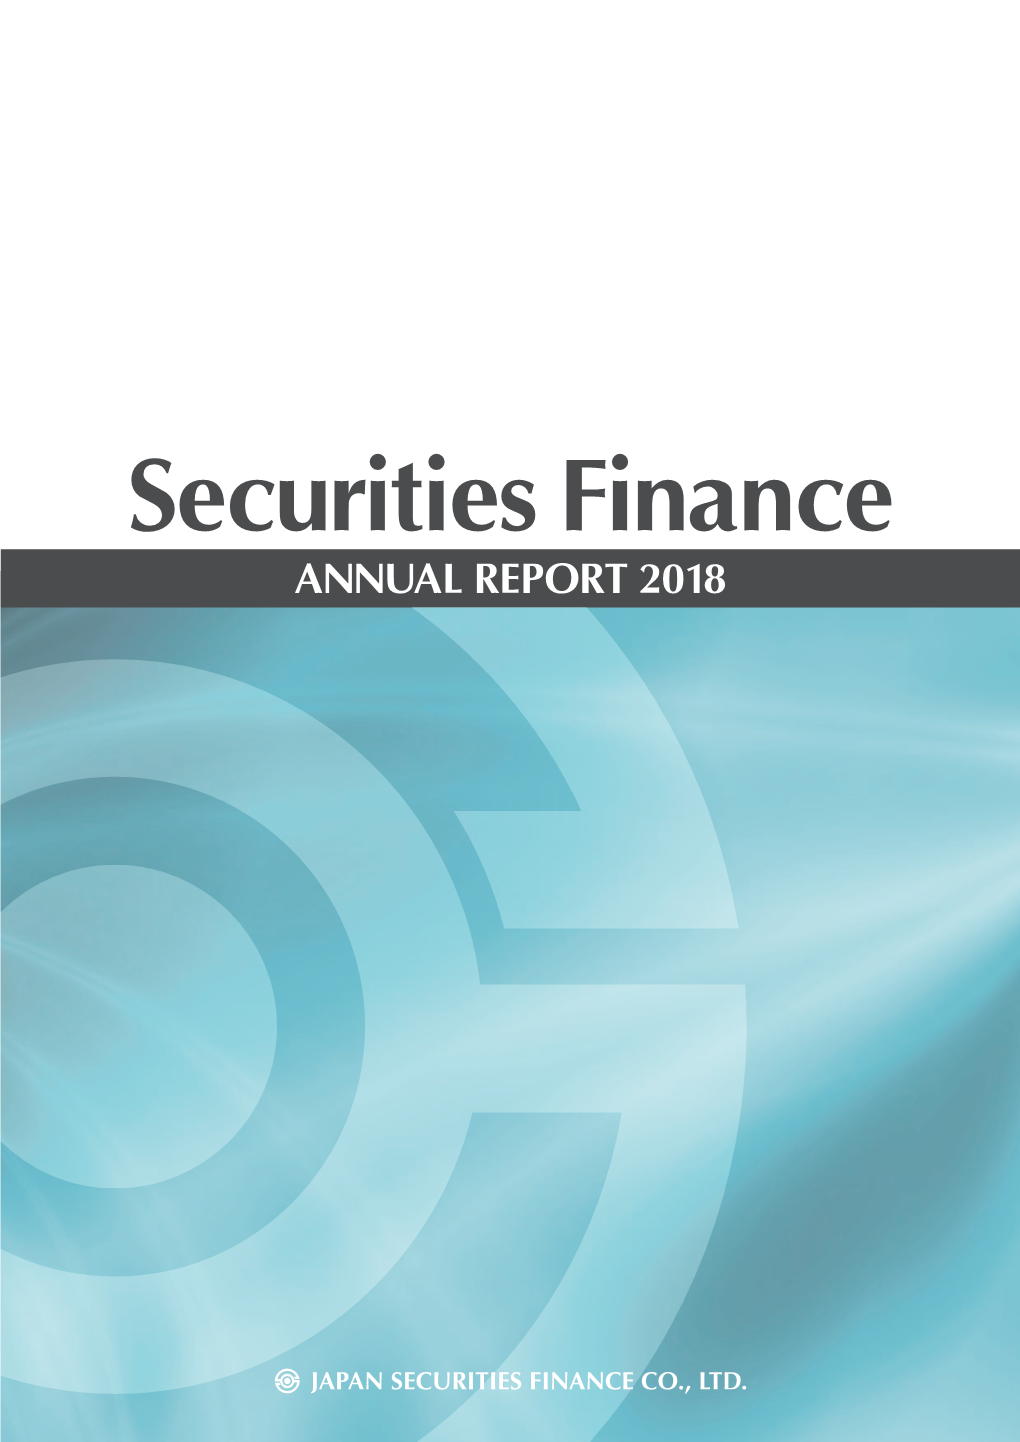 Securities Finance ANNUAL REPORT 2018 PROFILE